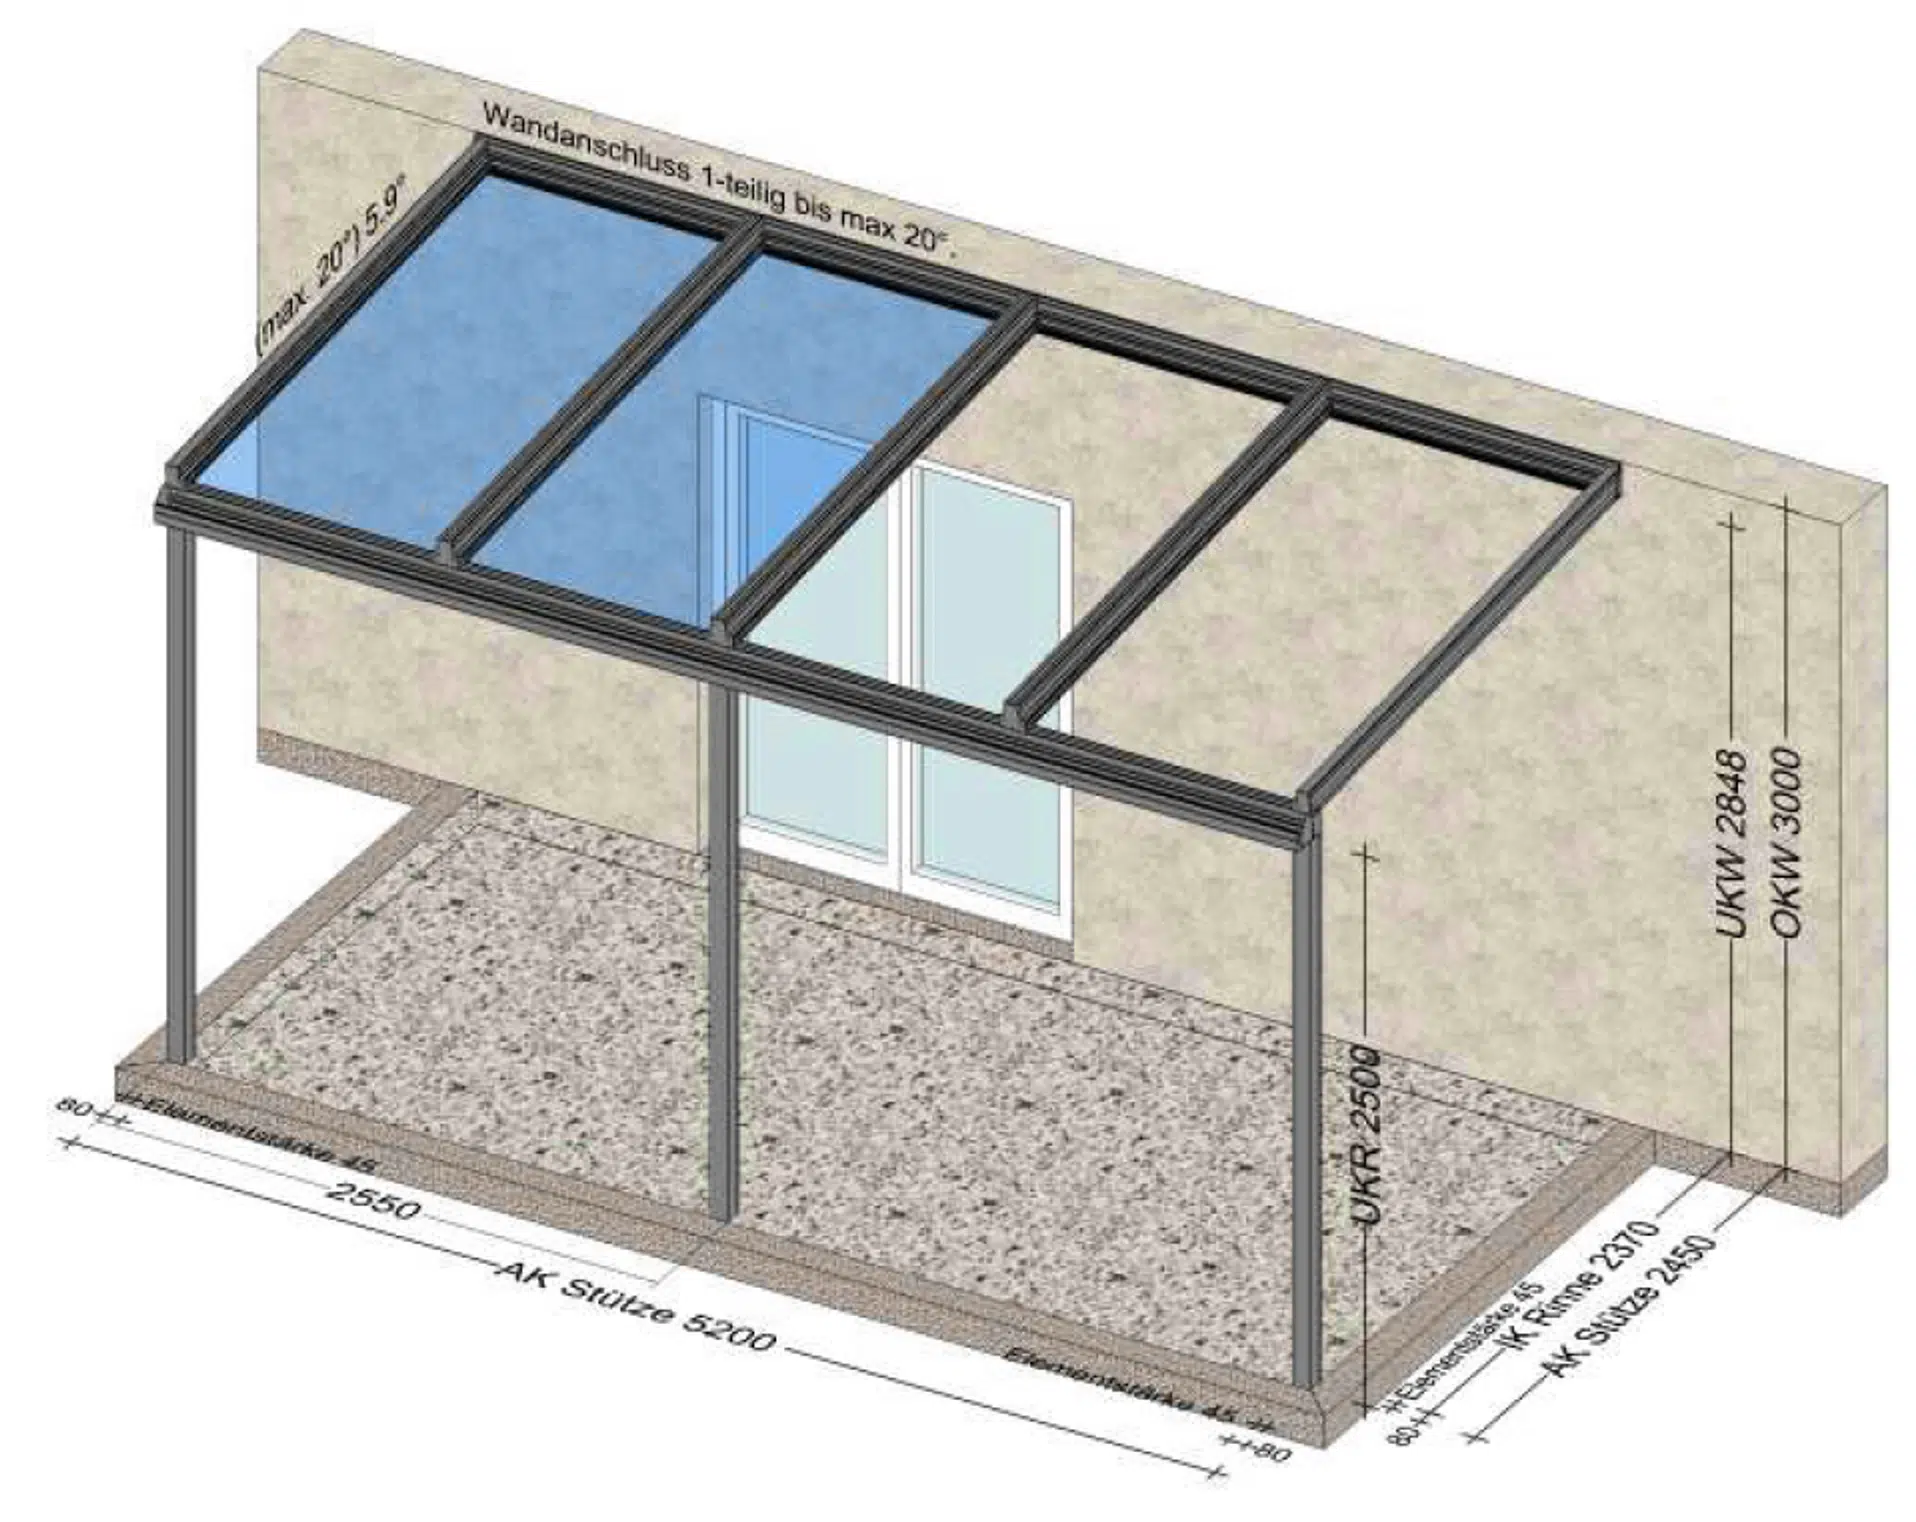 Terrassenüberdachung nur teilweise verglast - Planung